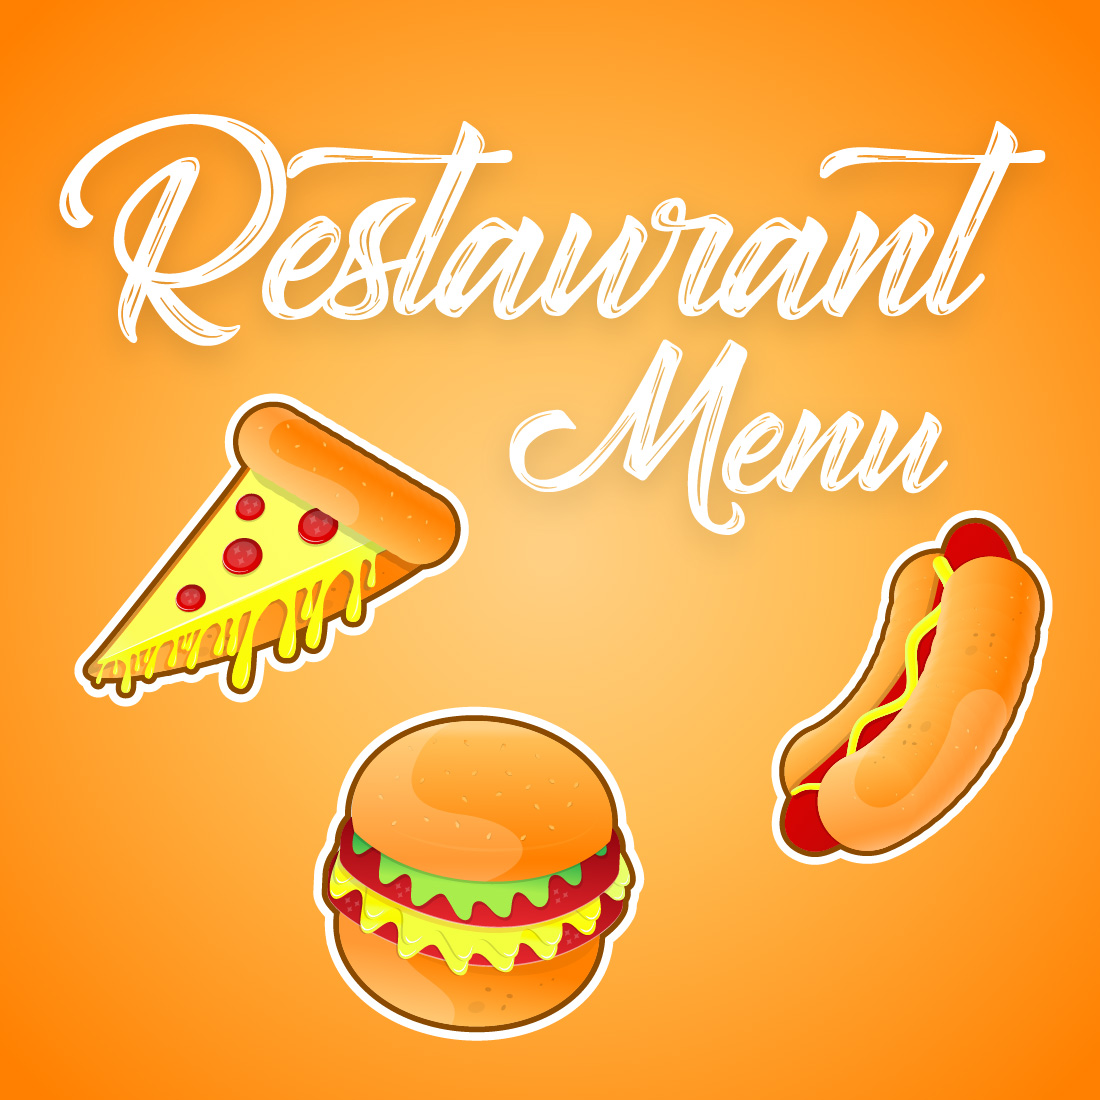 Food illustrations for Restaurant menu.